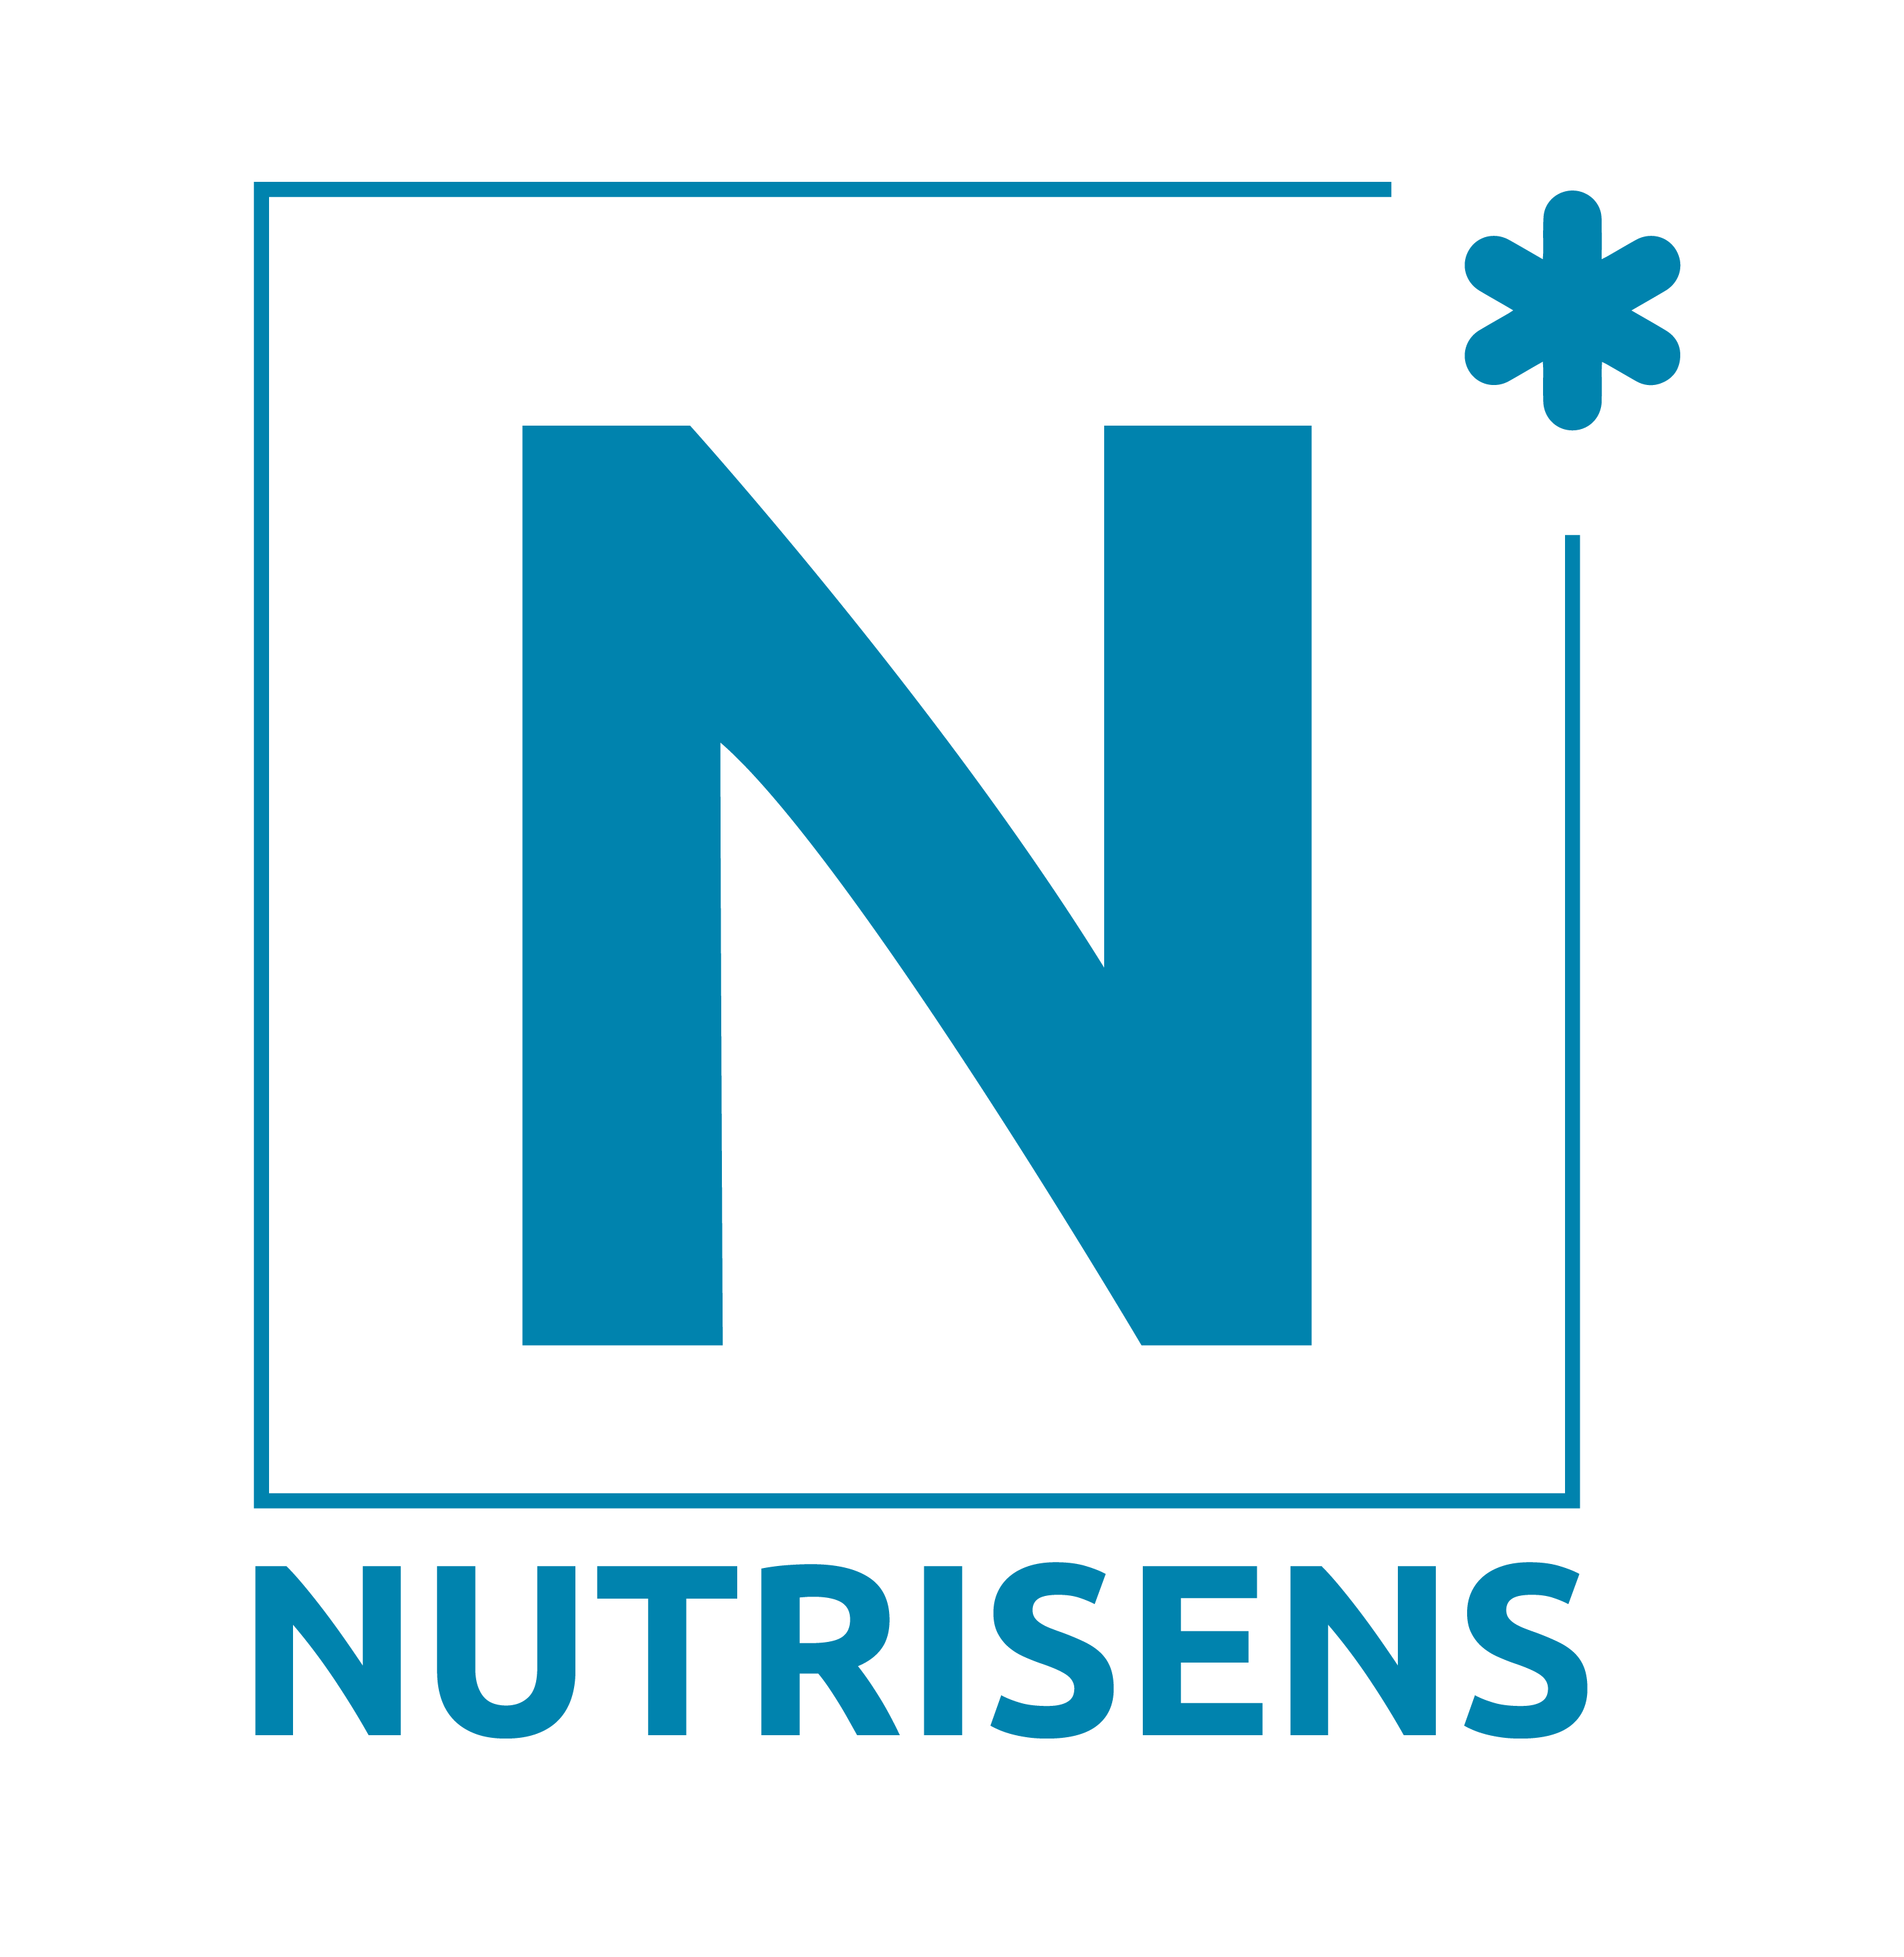 Nutrisens Group